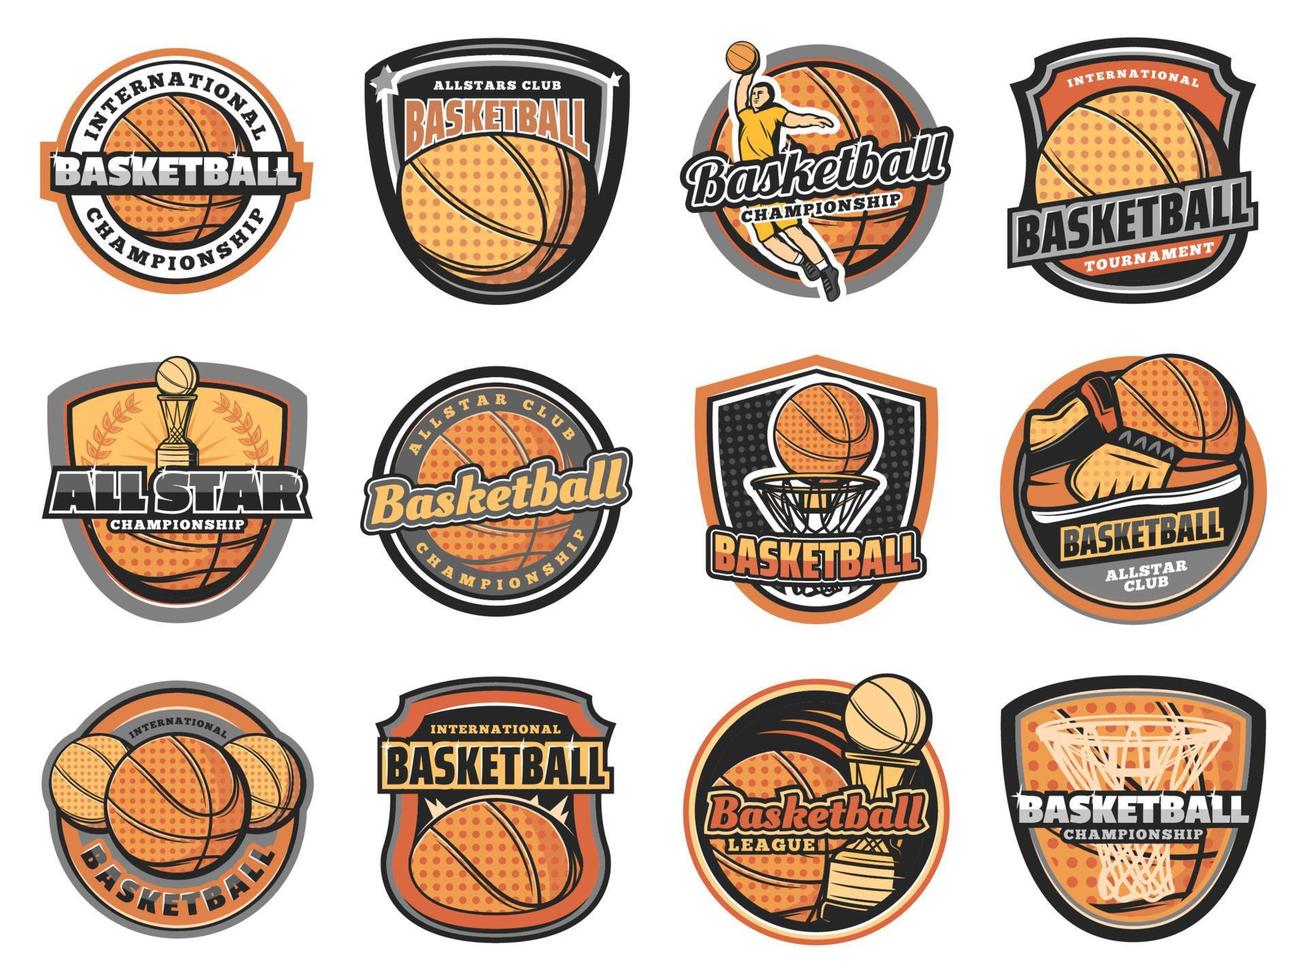 basketbal bal, mand, speler en trofee pictogrammen vector